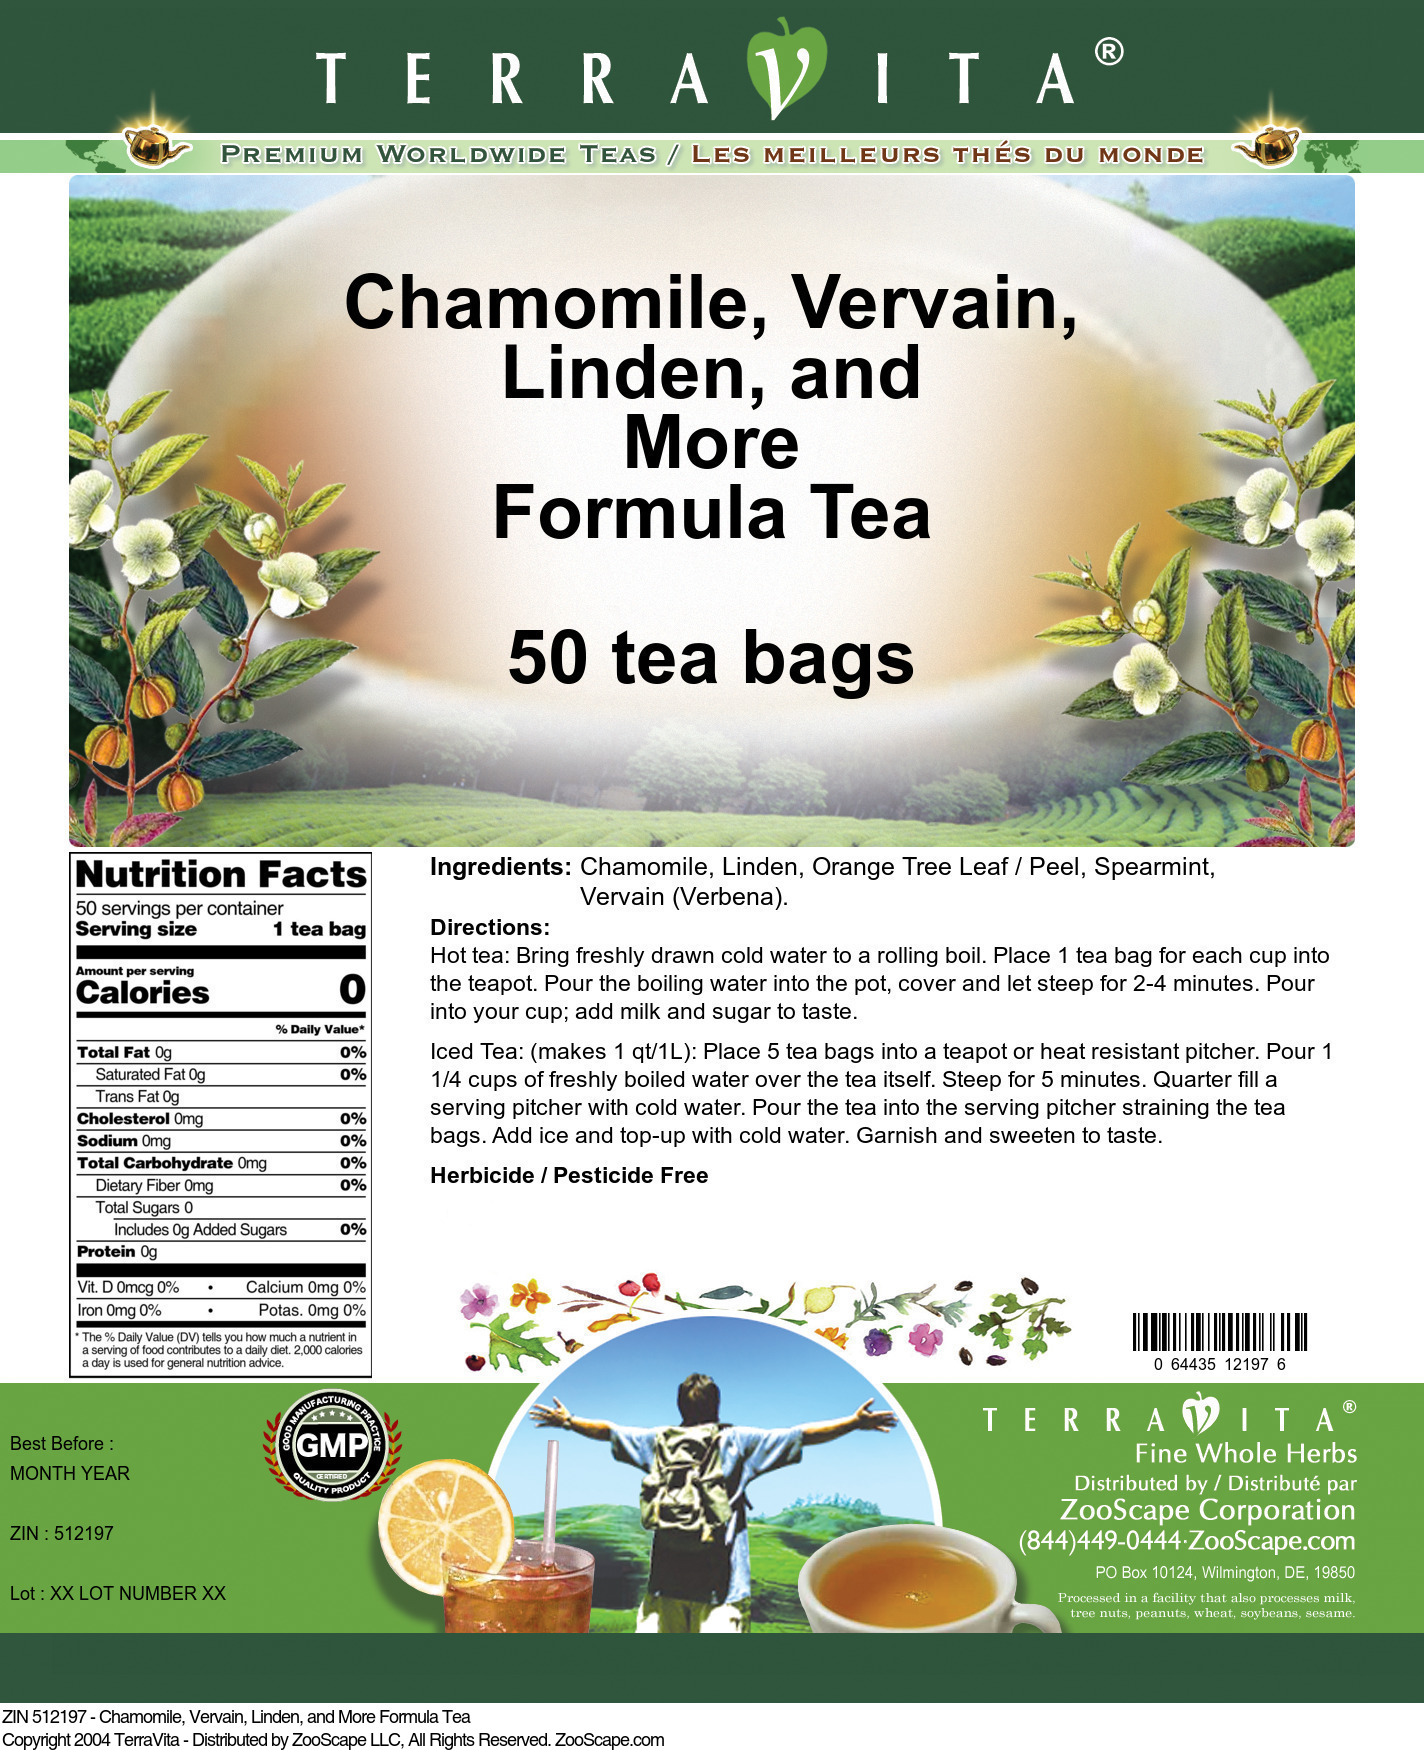 Chamomile, Vervain, Linden, and More Formula Tea - Label